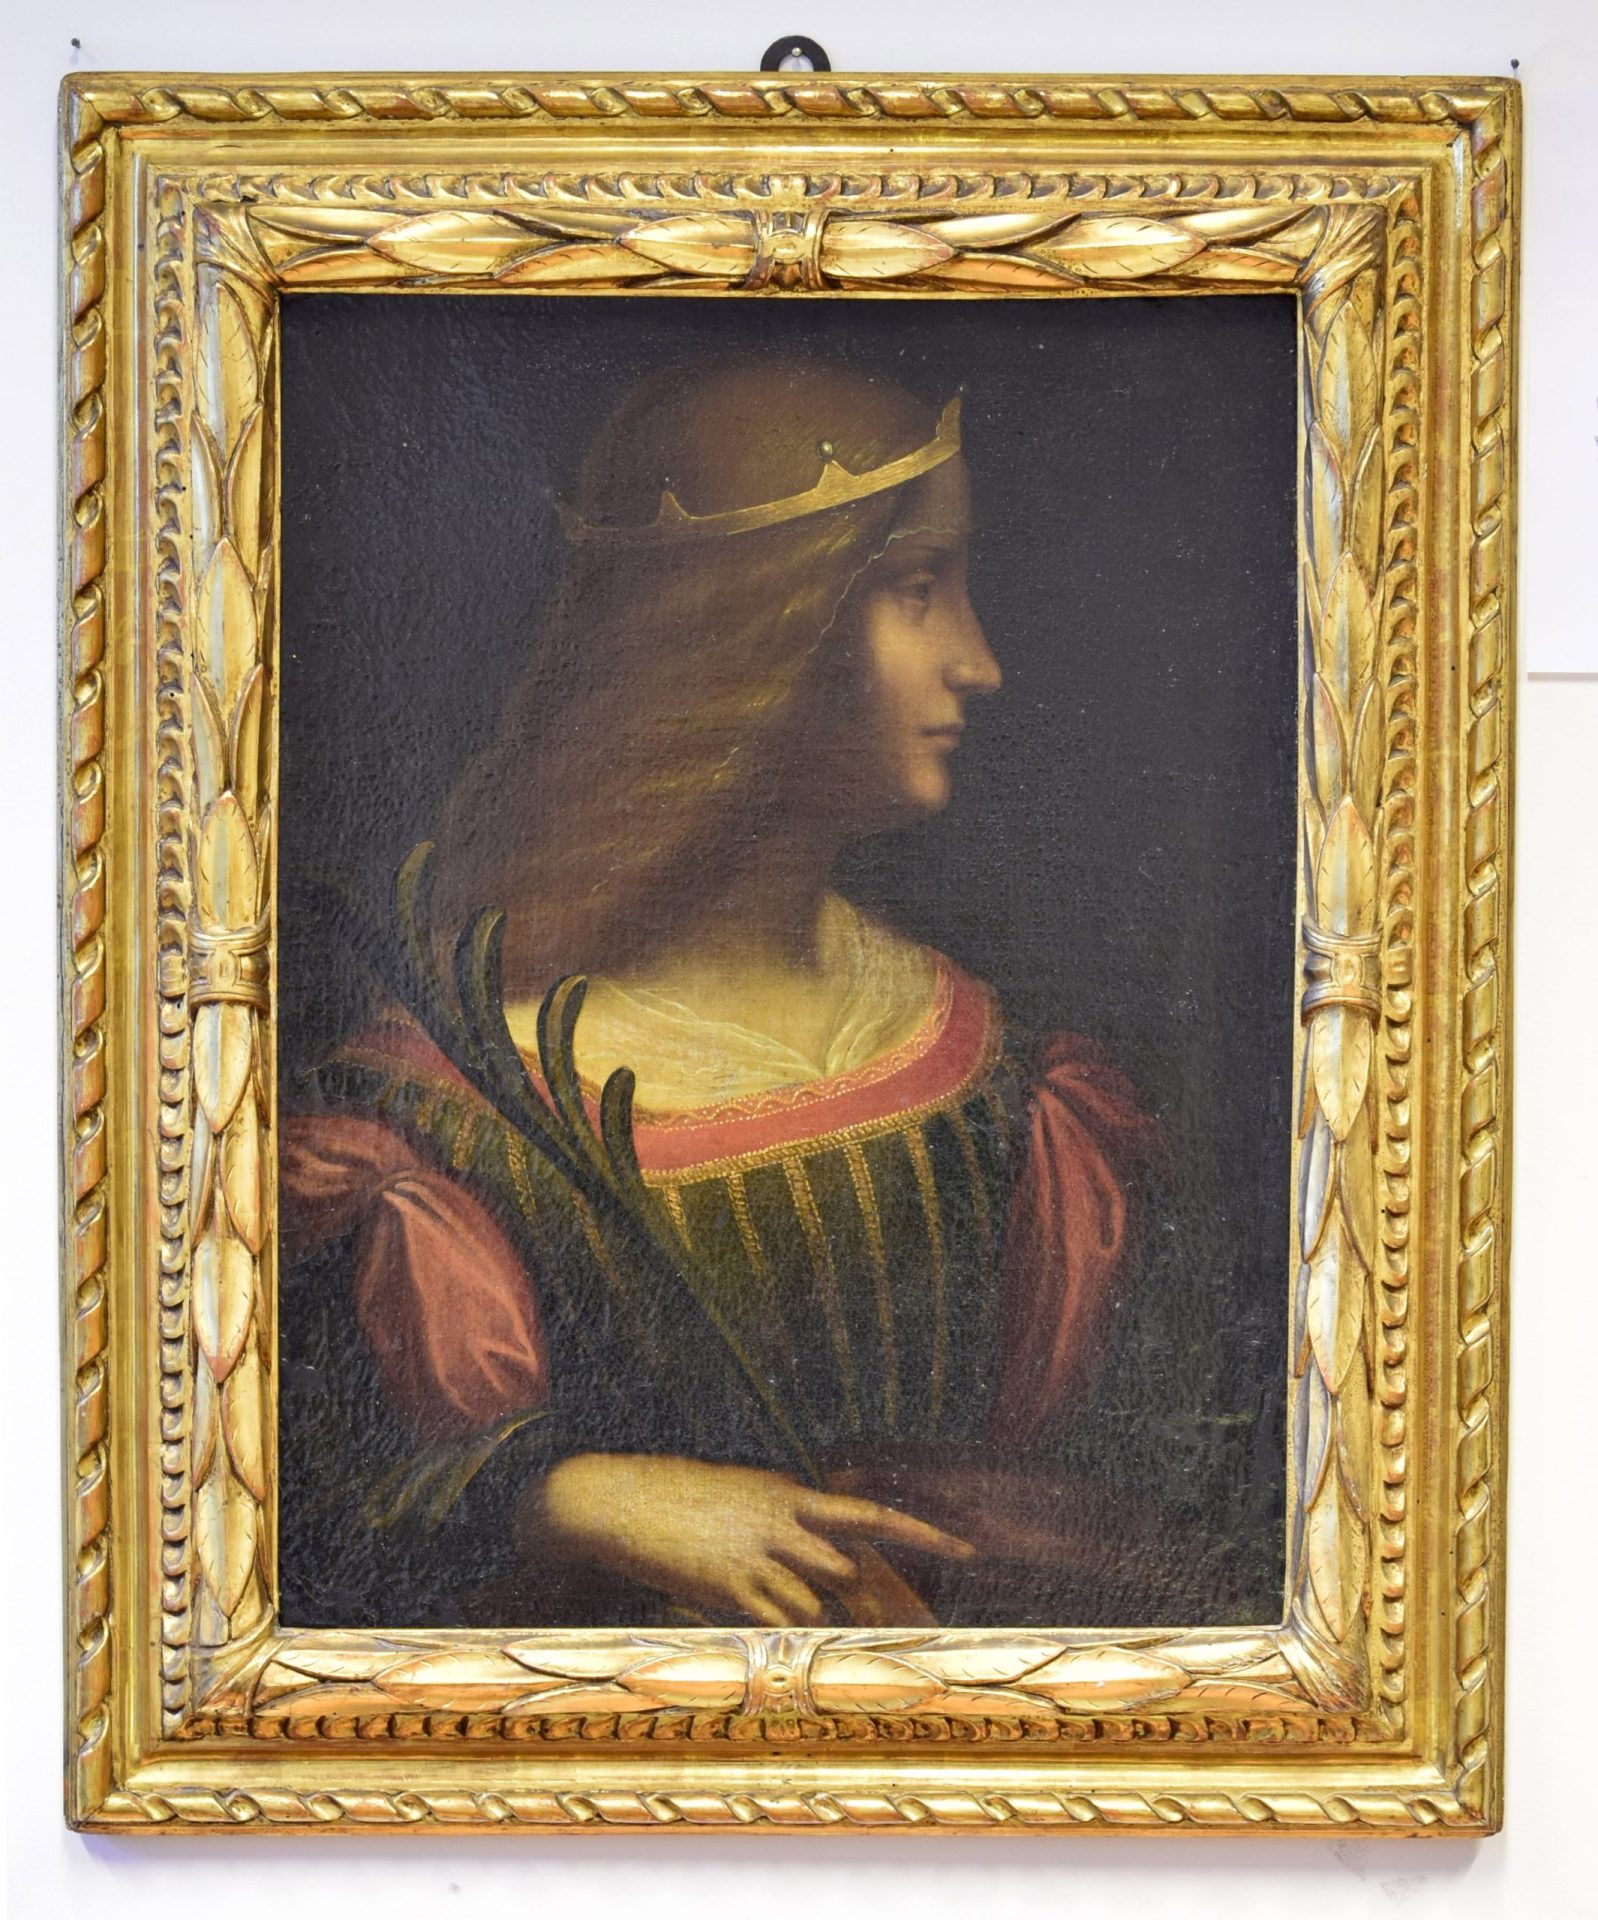 Pintura de Leonardo da Vinci descoberta em cofre de banco